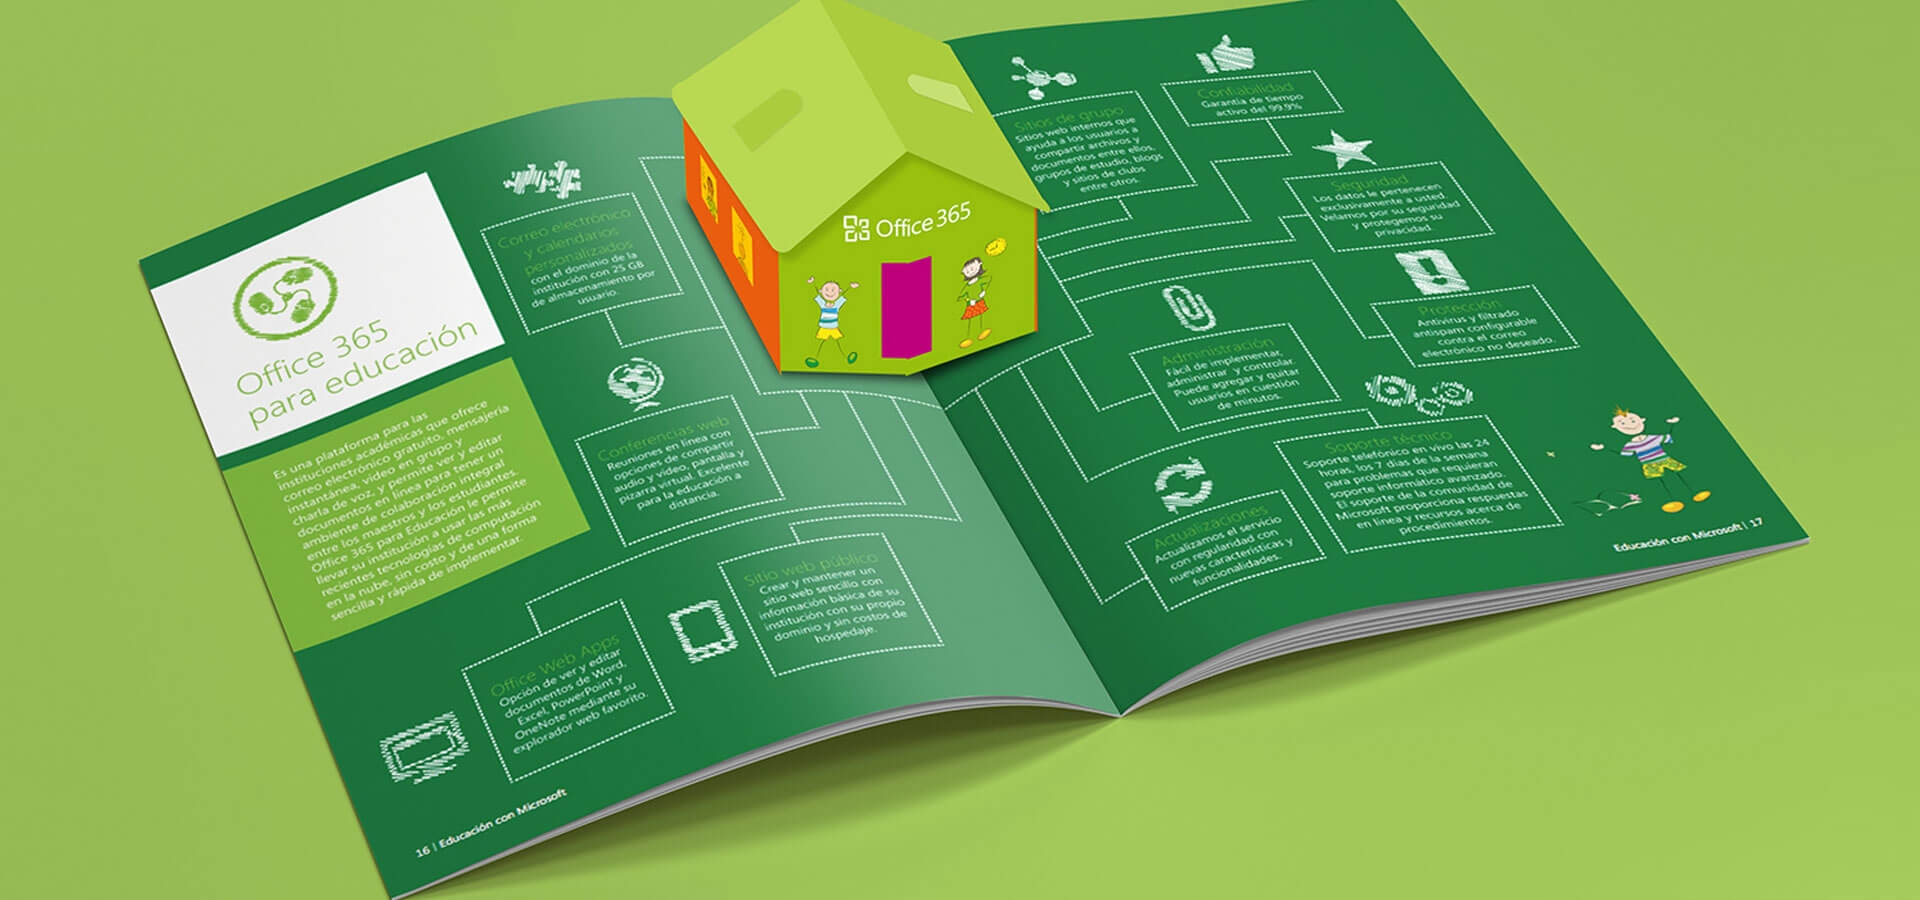 19+ 3D Pop Up Brochure Designs | Free & Premium Templates With Regard To Pop Up Brochure Template